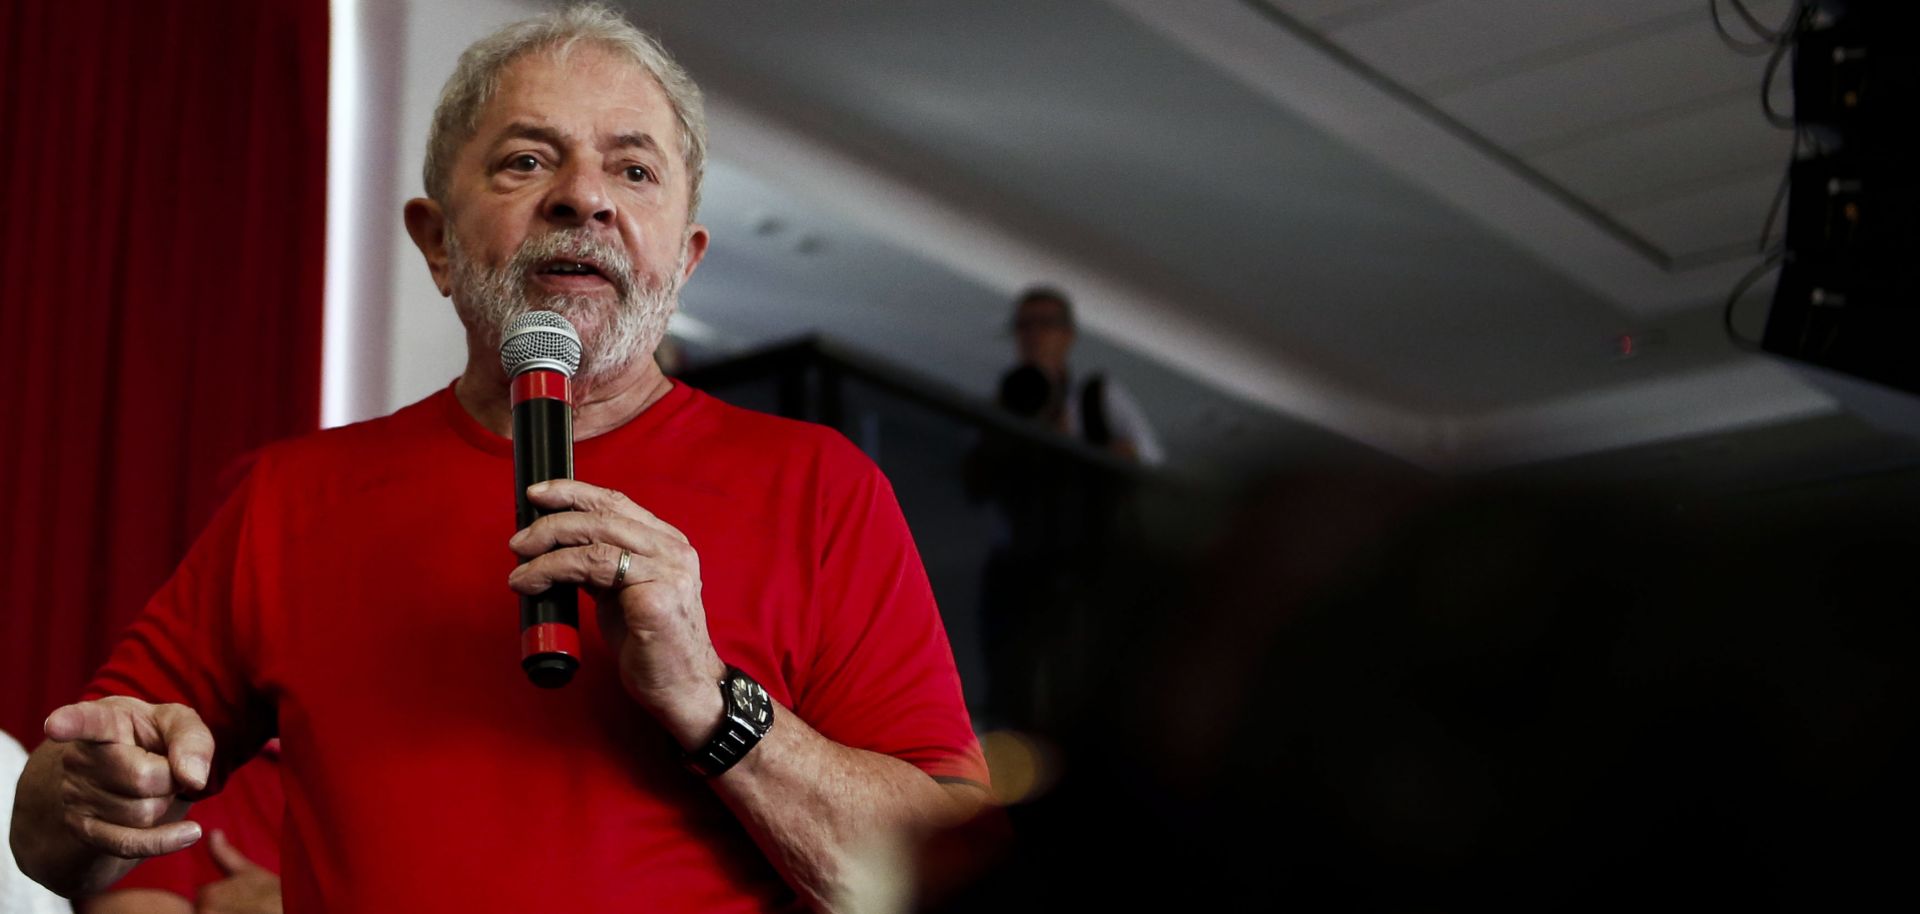 Former Brazilian President Luiz Inacio Lula da Silva speaks to supporters in Sao Bernardo do Campo on Jan. 24, 2018.